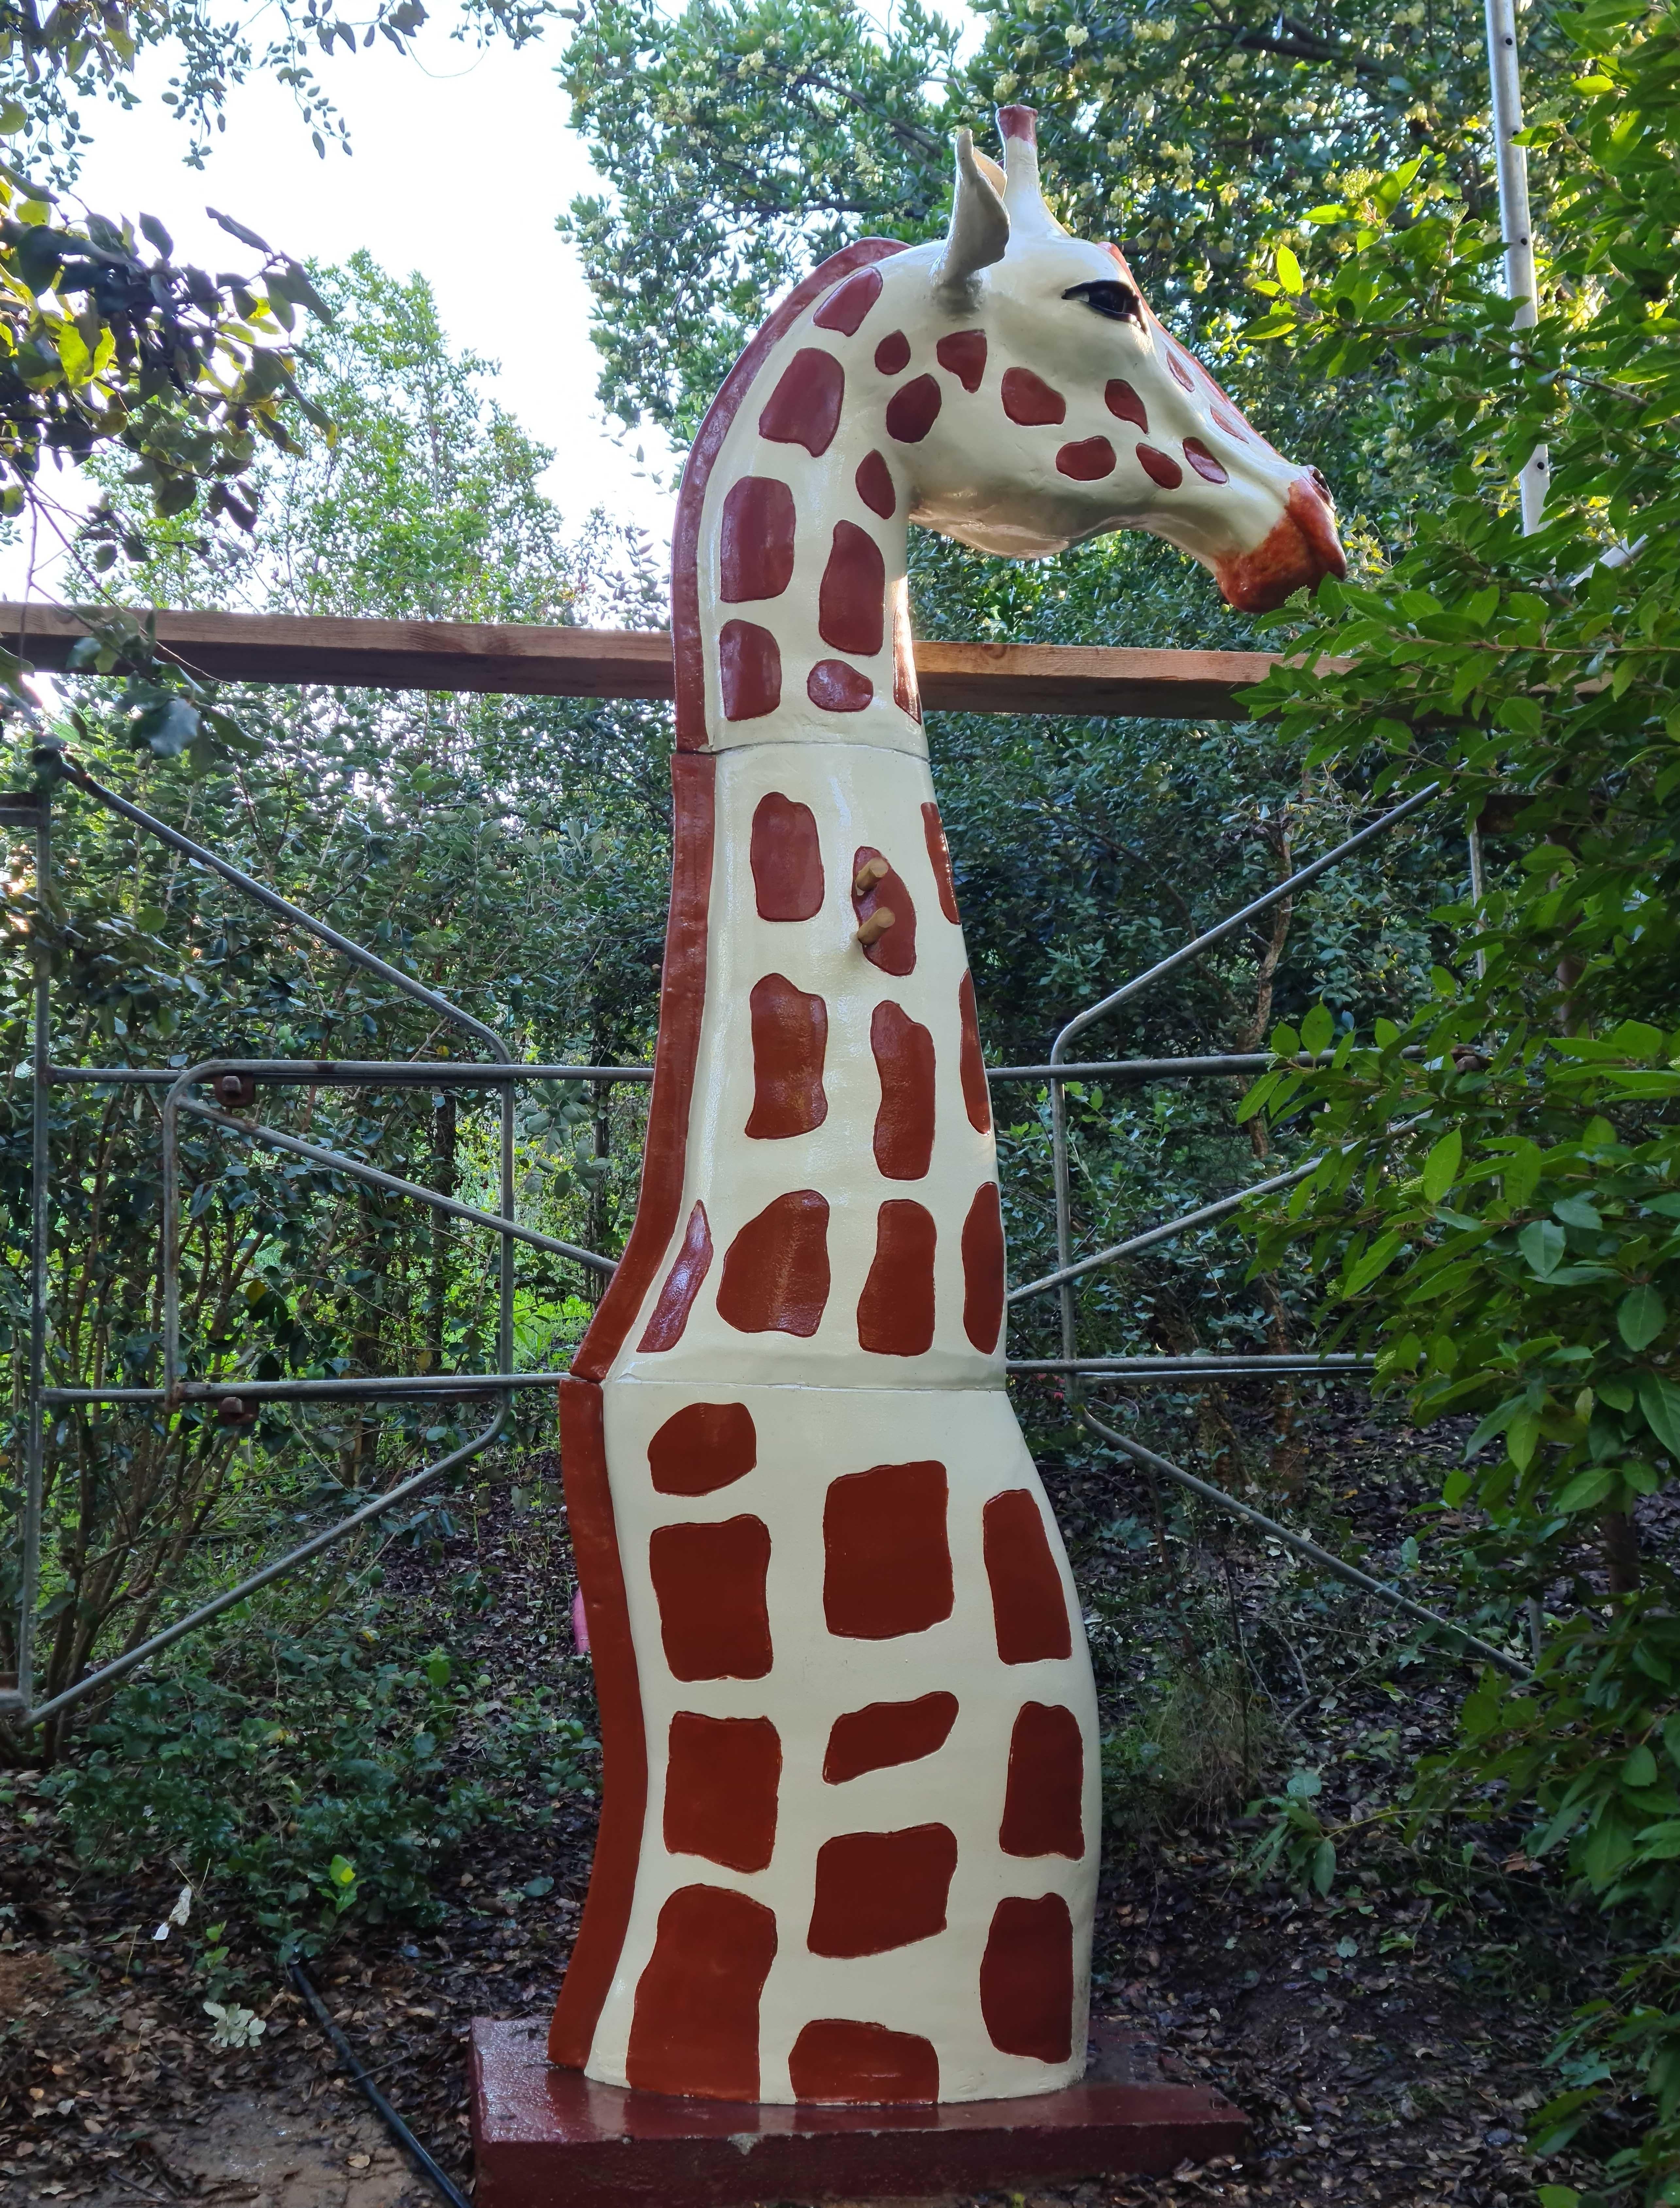 Mariko Figurative Sculpture - Giraffe - Monumental Contemporary Resin Outdoor Sculpture